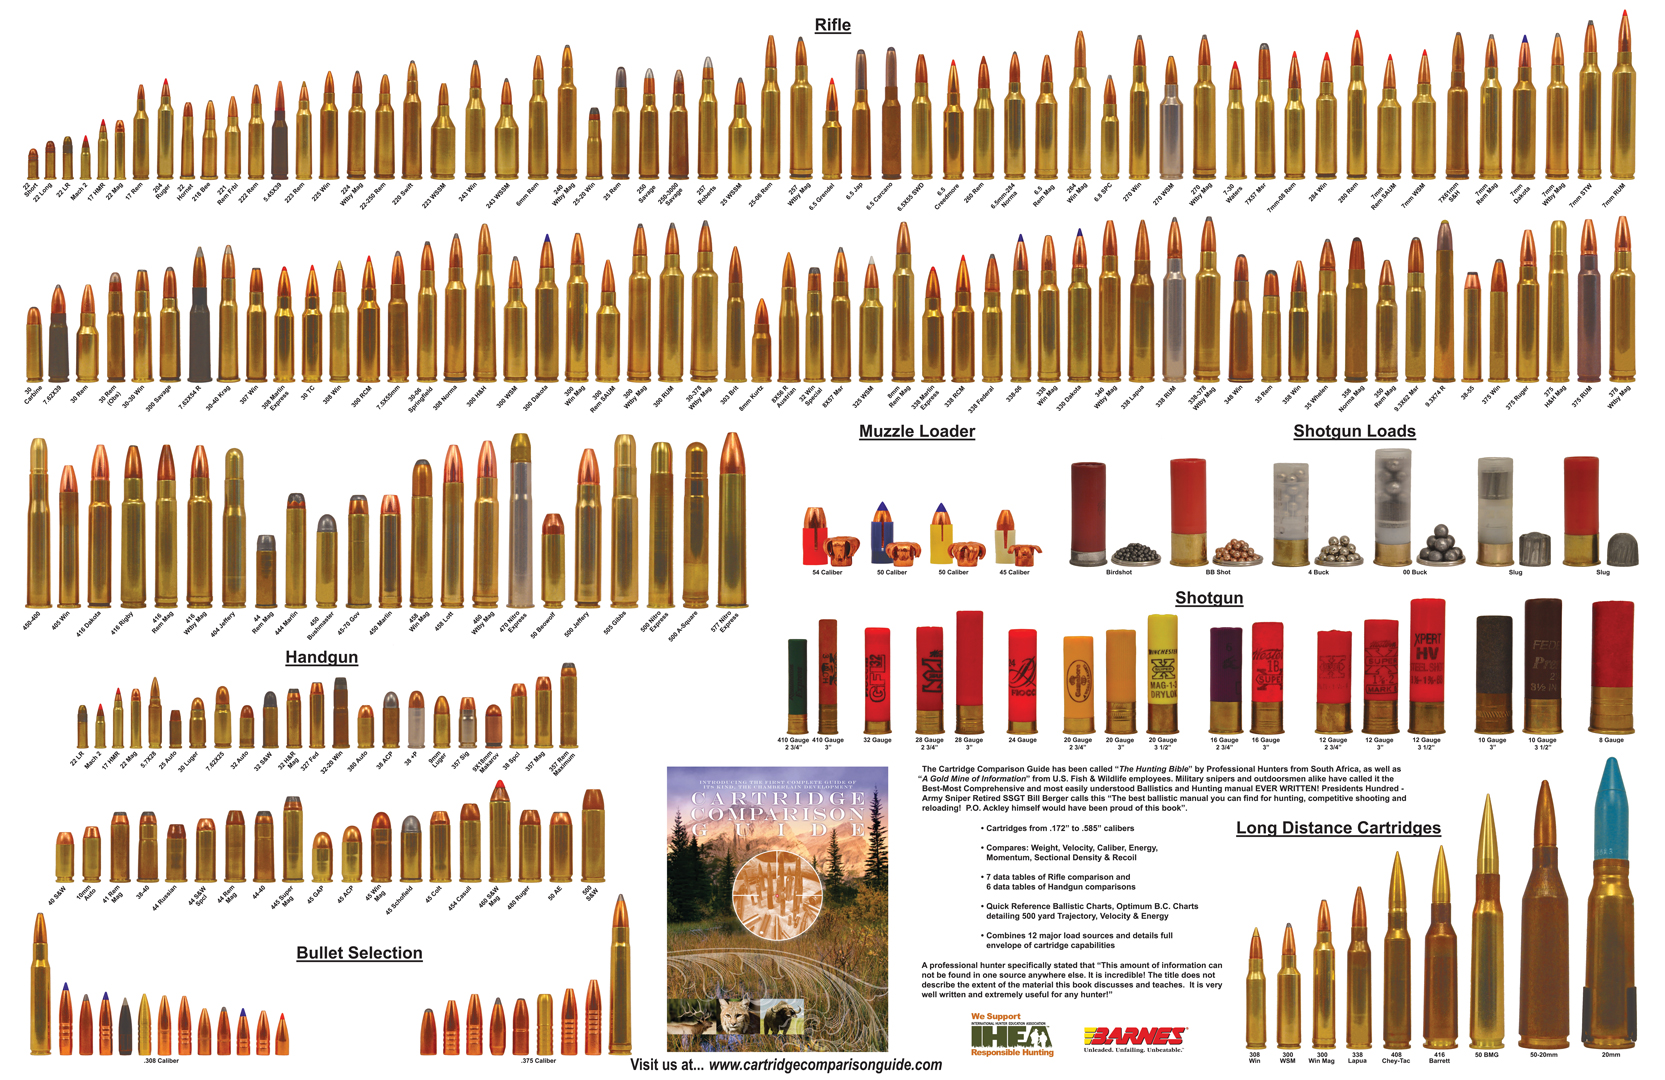 Cartridge Comparison Guide The Ultimate Hunting And Ballistics Manual Outdoorhub